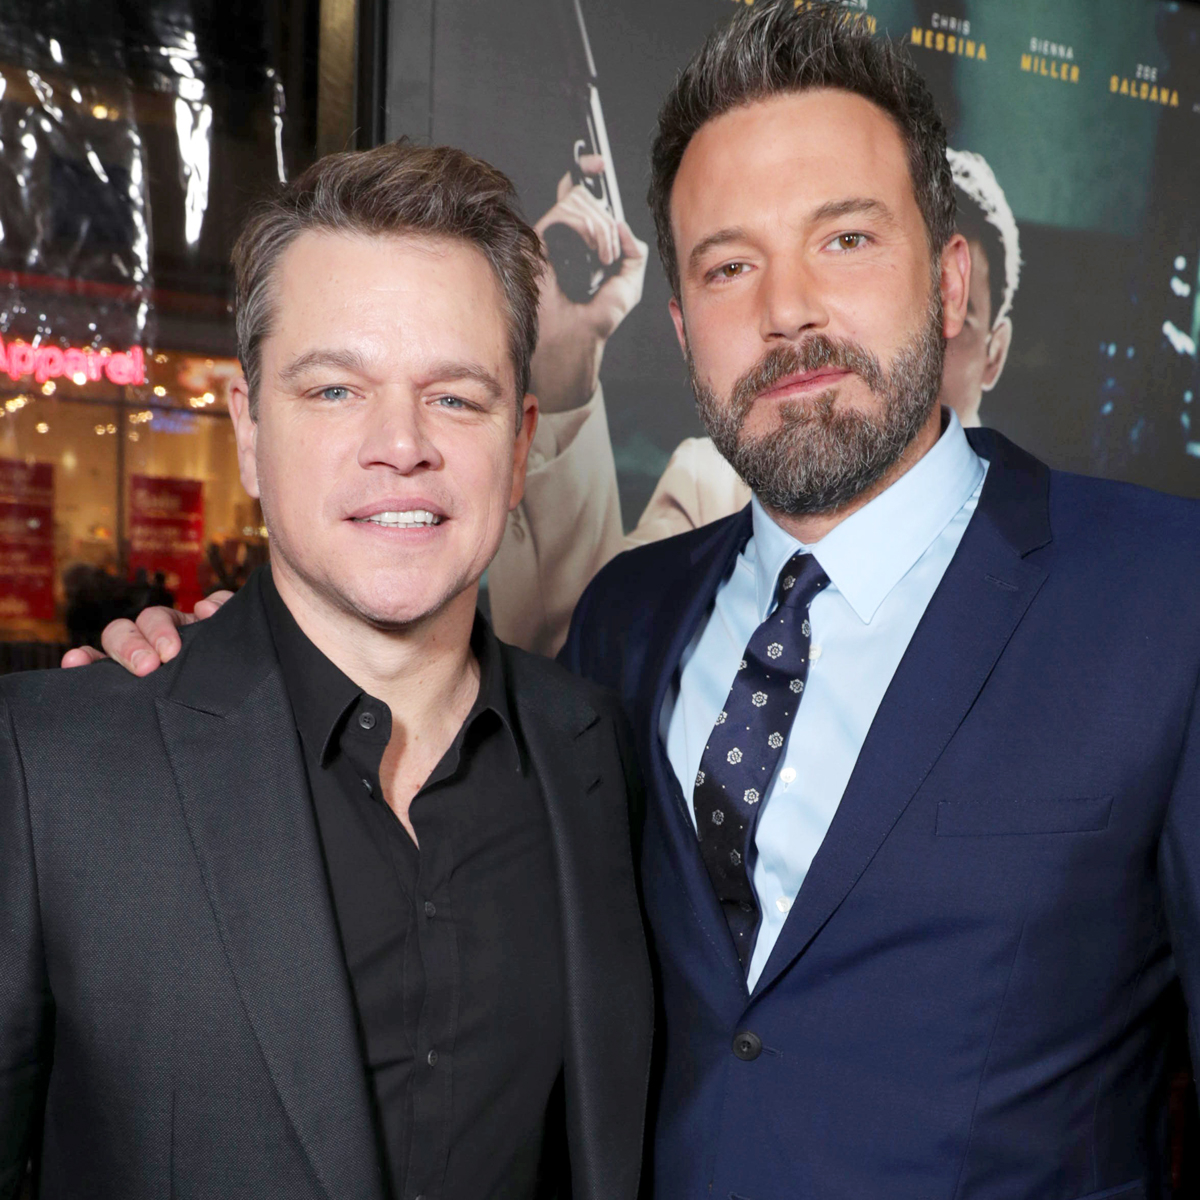 Ben Affleck Celebrity Porn - Ben Affleck Debuts Jaw-Dropping New Look in Video With Matt Damon - E!  Online